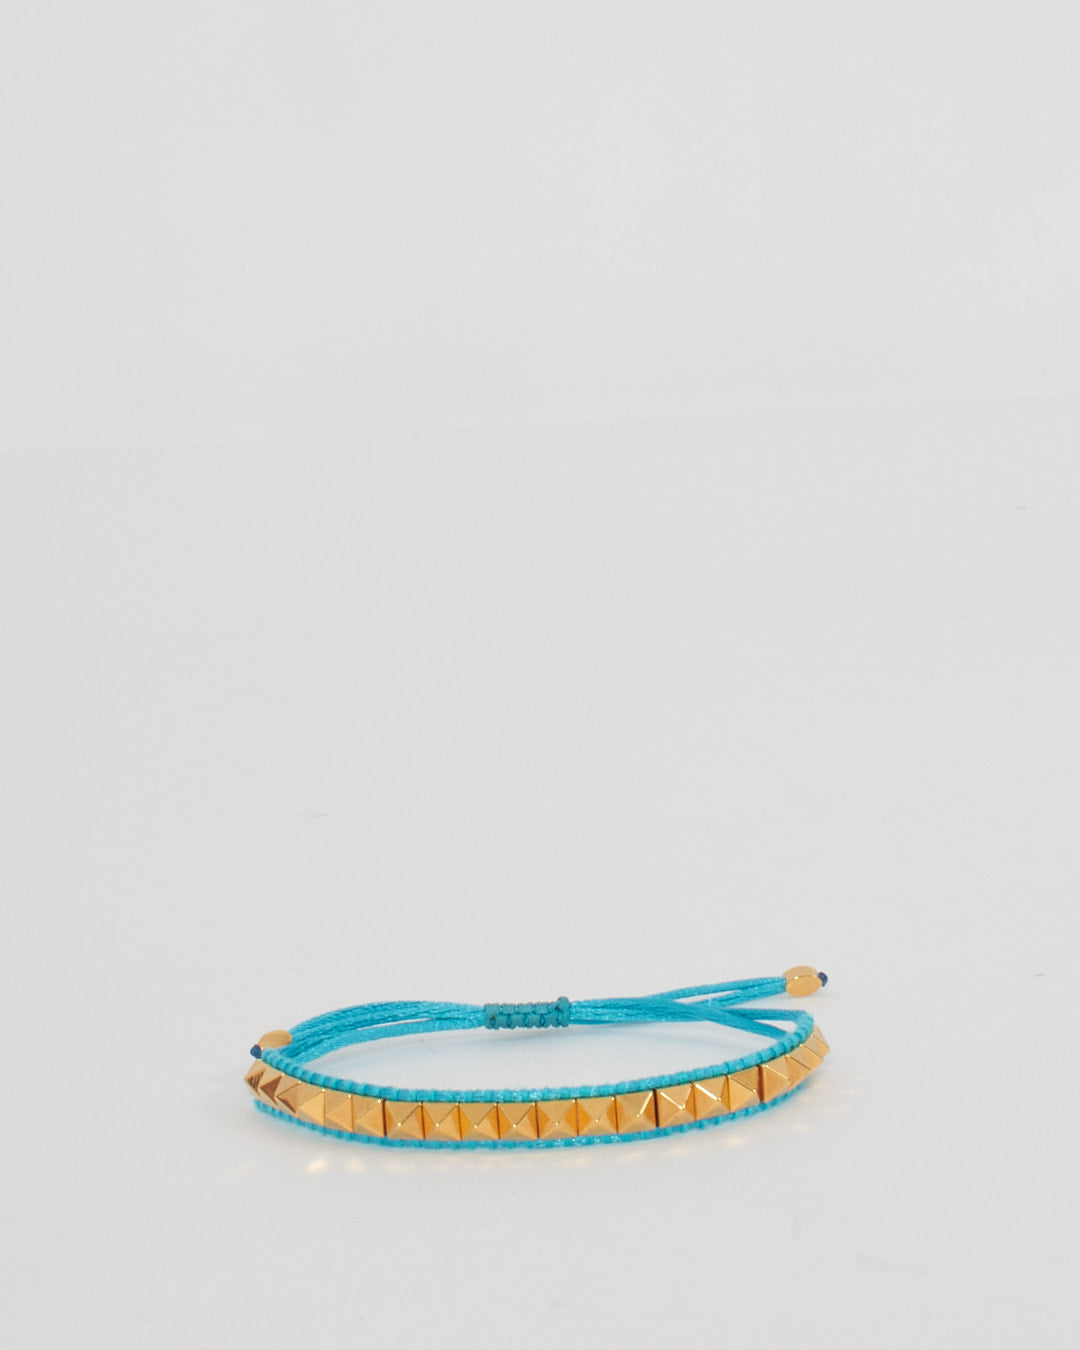 Valentino Blue Teal Cord Gold Stud Bracelet